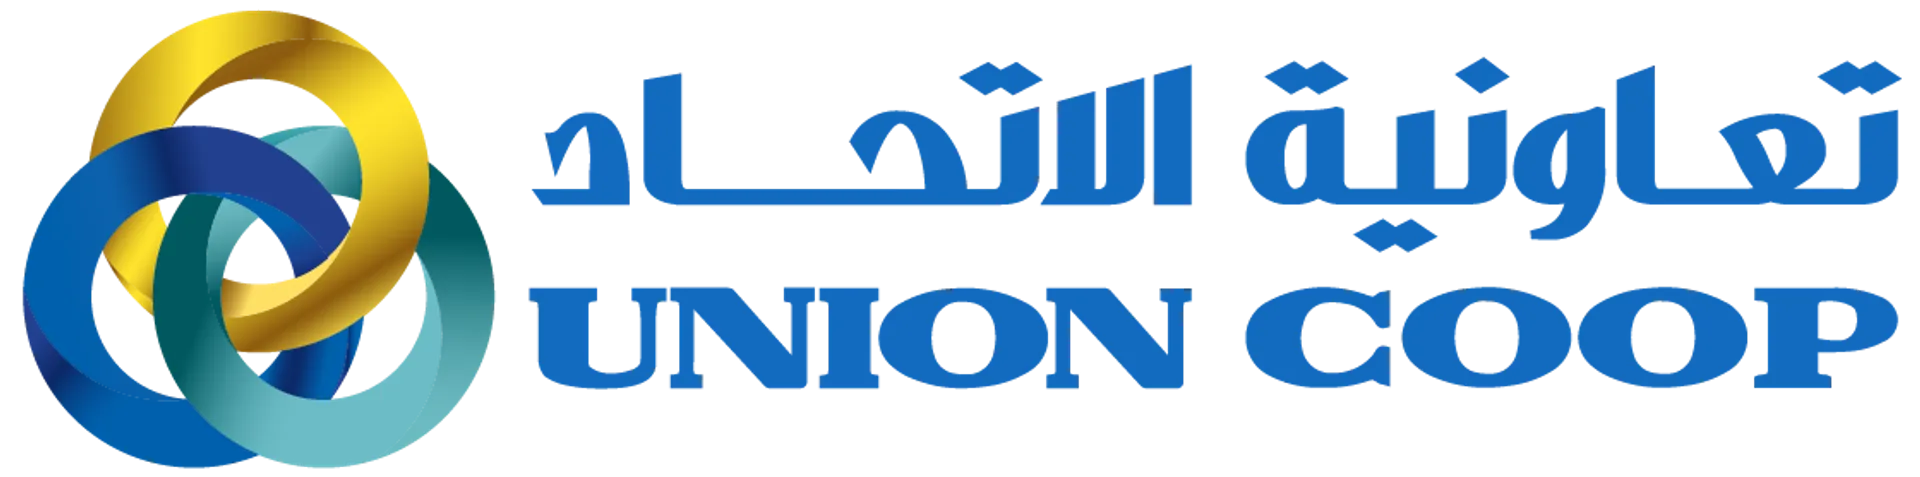 UNION COOP logo. Current catalogue